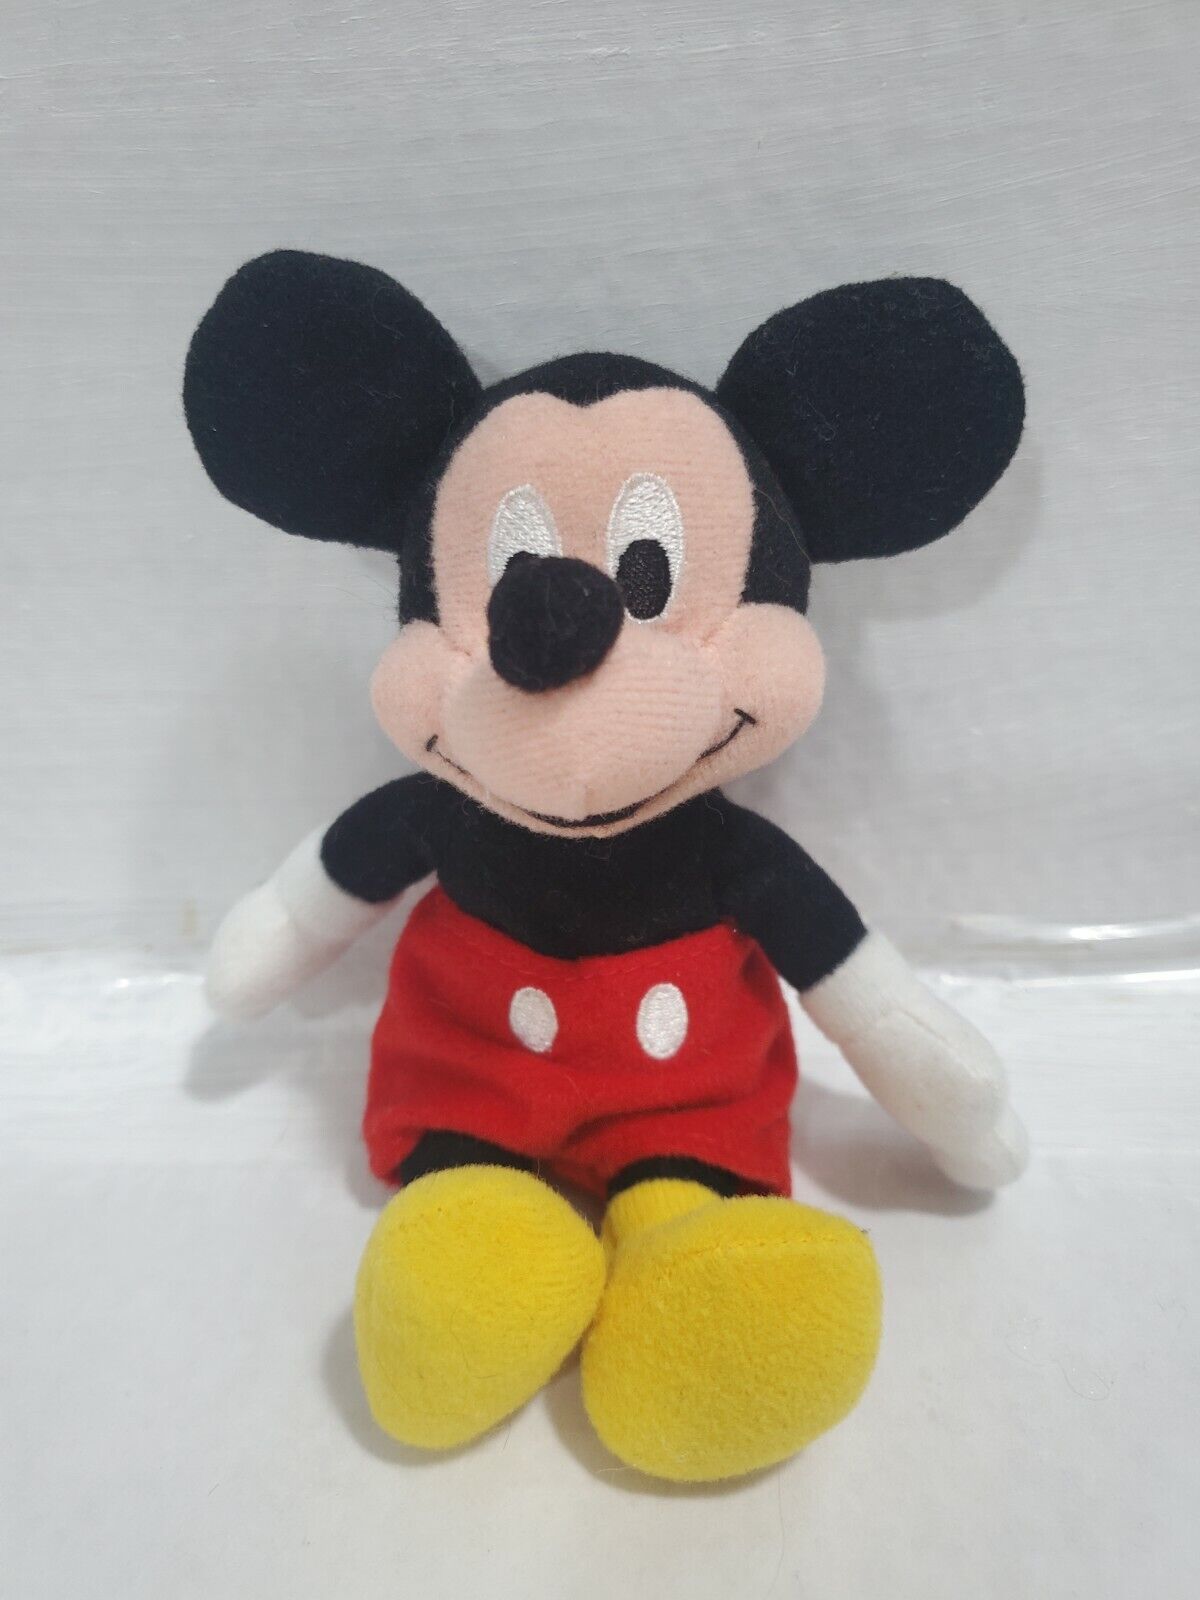  Mickey Mouse 6 inch Disney plush